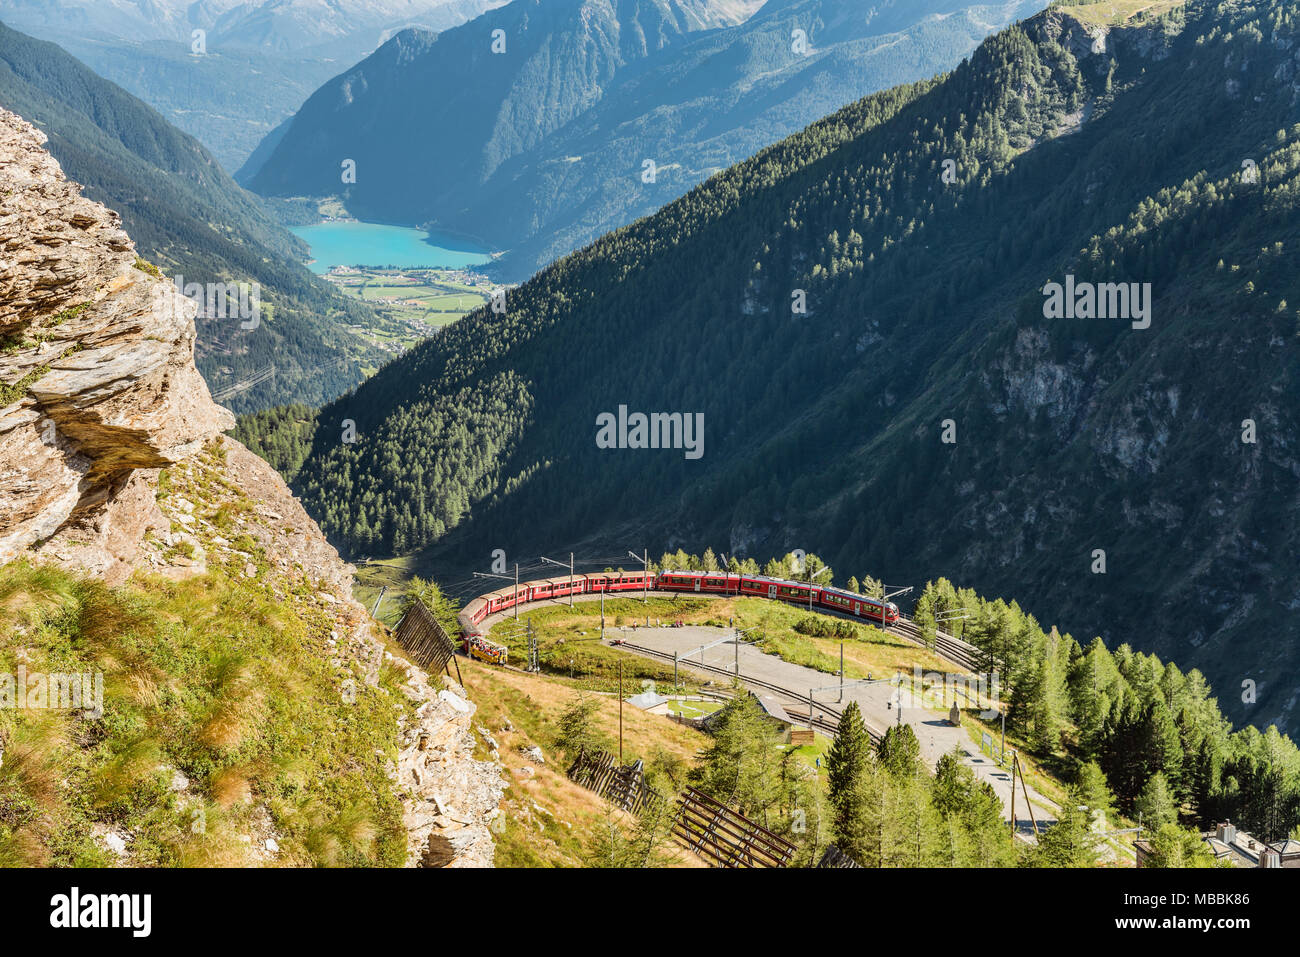 Mountain train at Alp Gruem train station, with the Valposchiavo in the background, Engadin, Switzerland Stock Photo